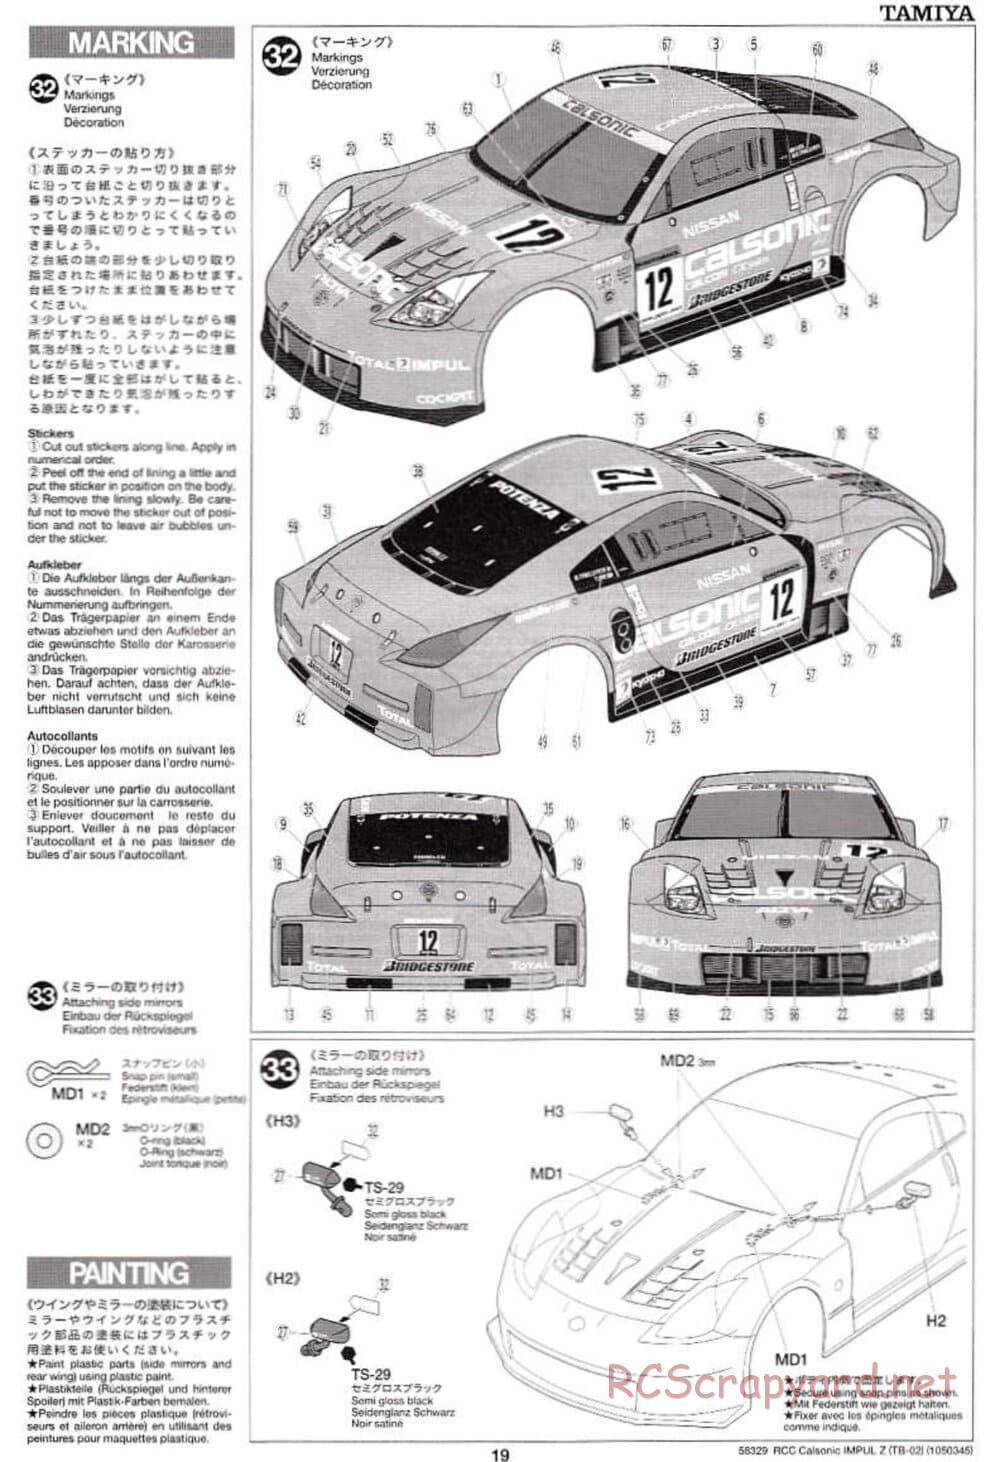 Tamiya - Calsonic Impul Z - TB-02 Chassis - Manual - Page 19